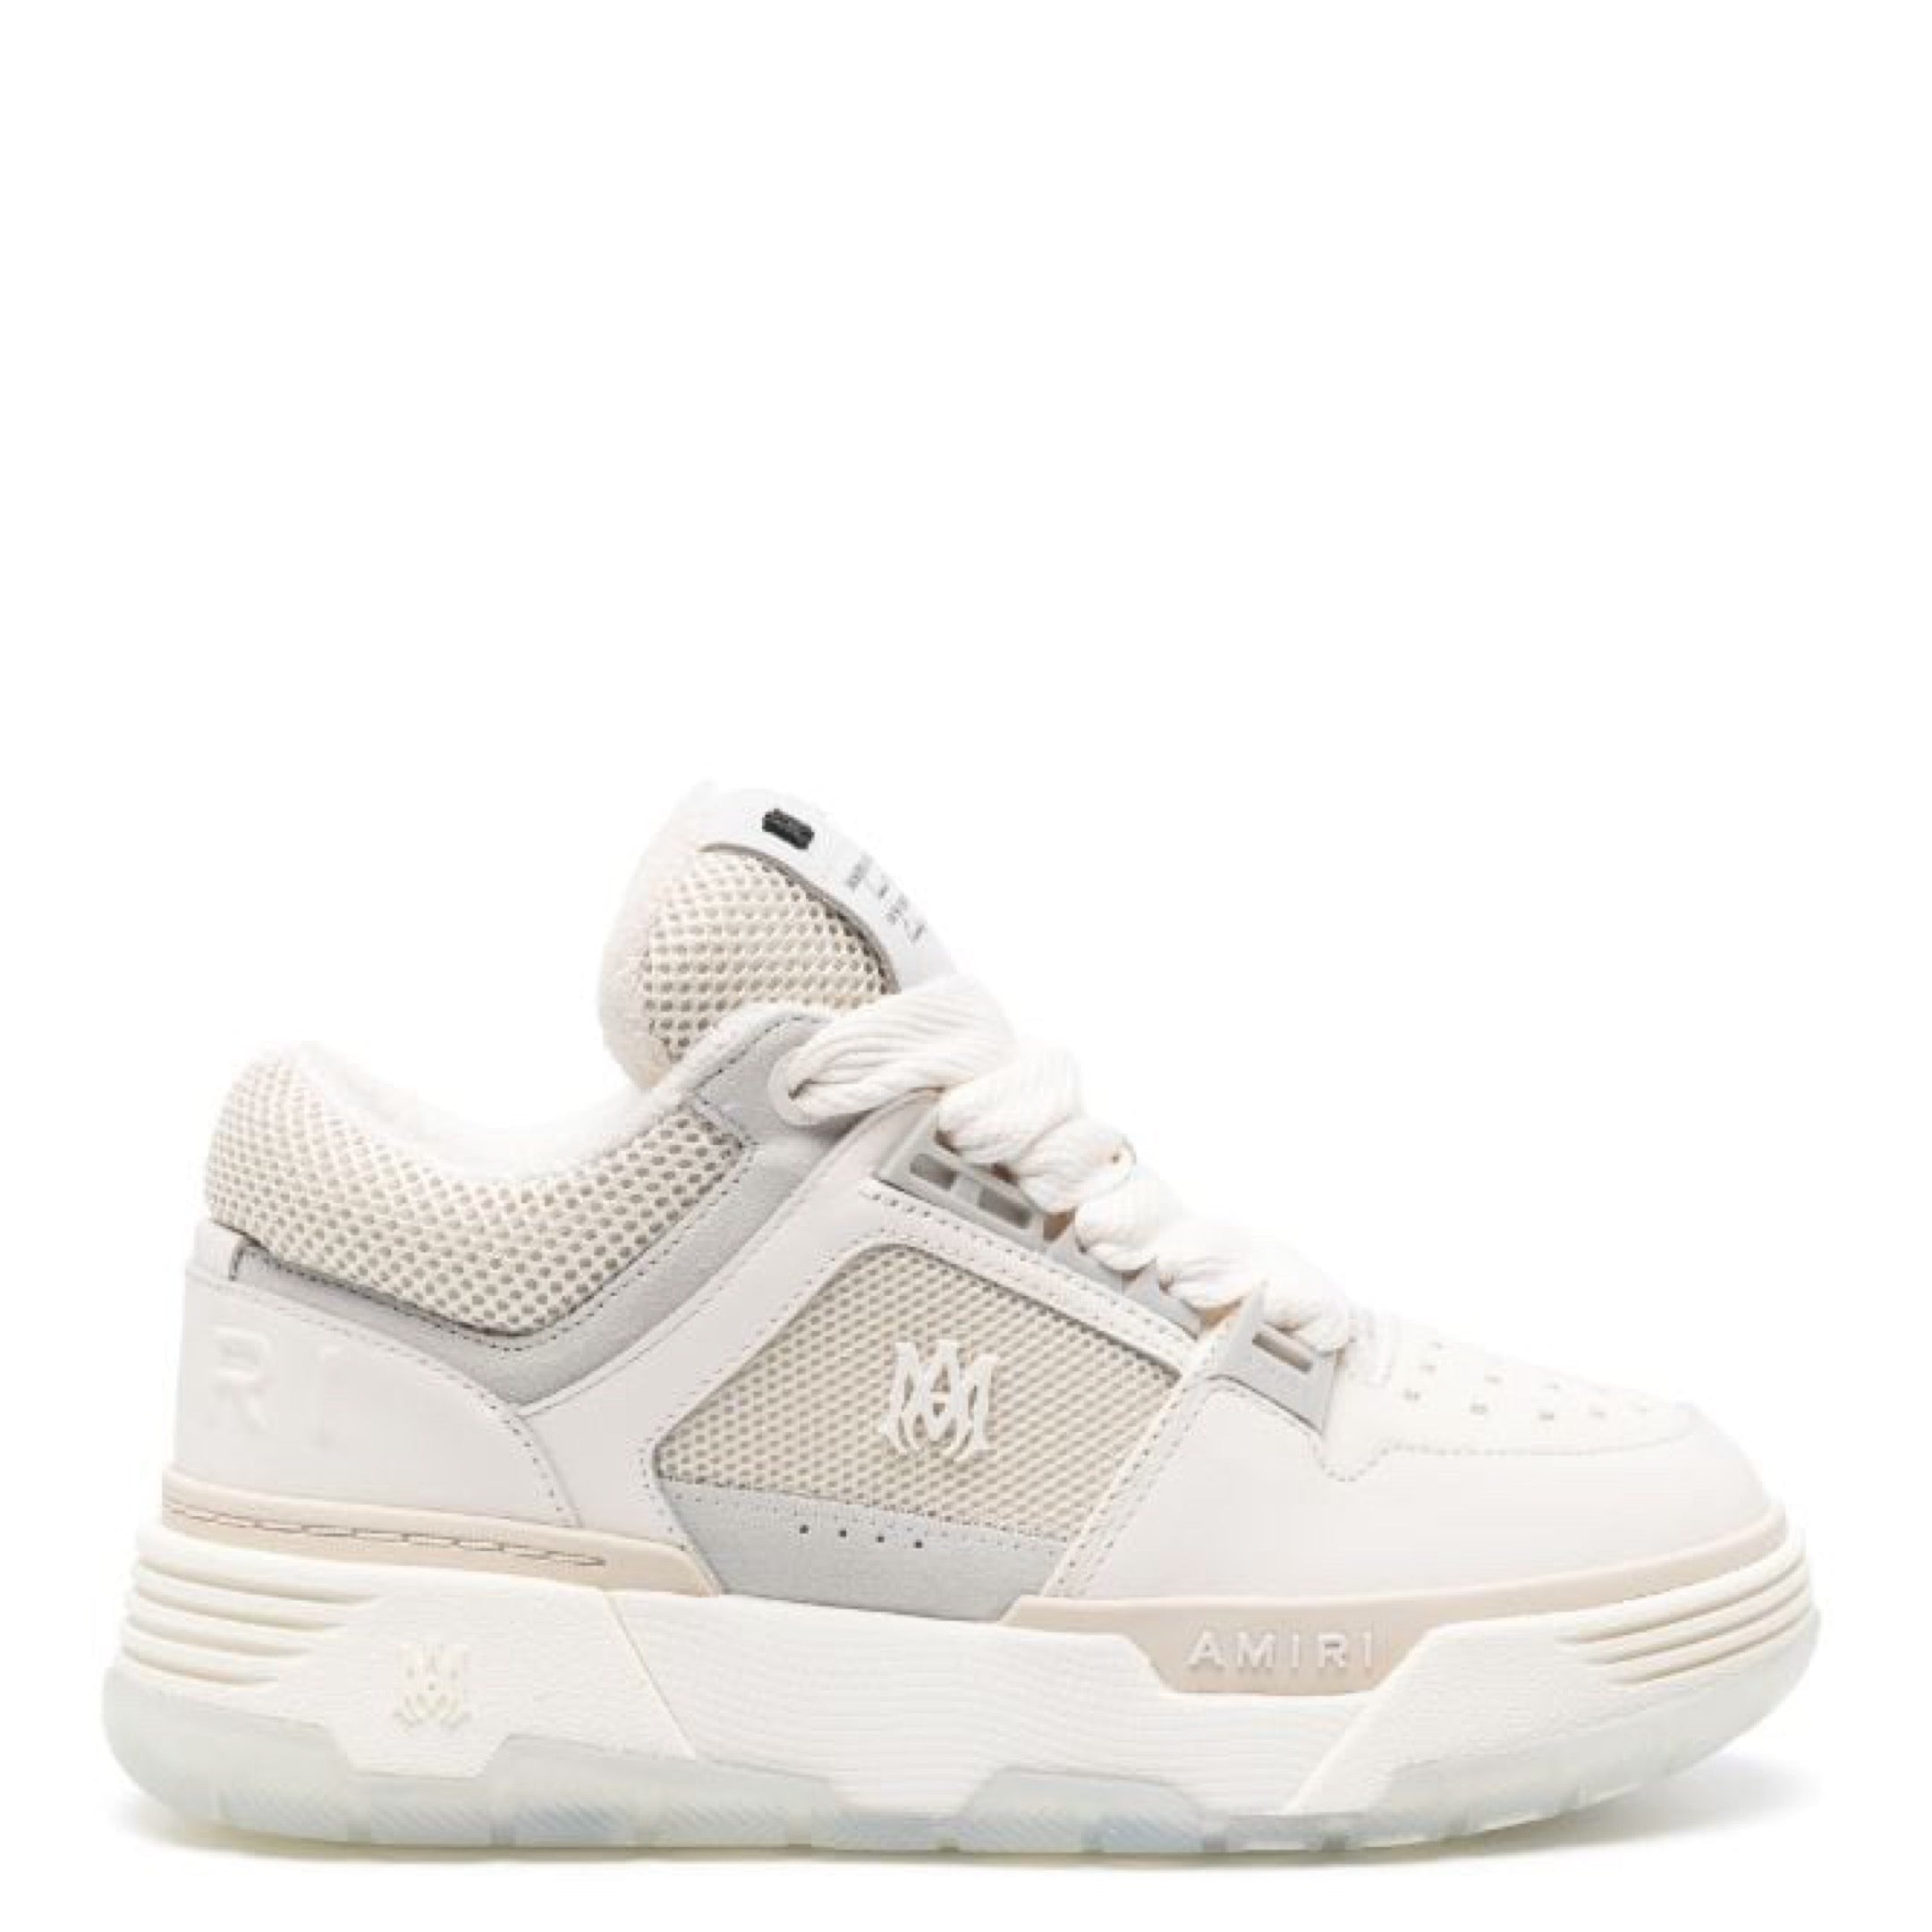 AMIRI Leather MA-1 Sneakers WHITE/GREY